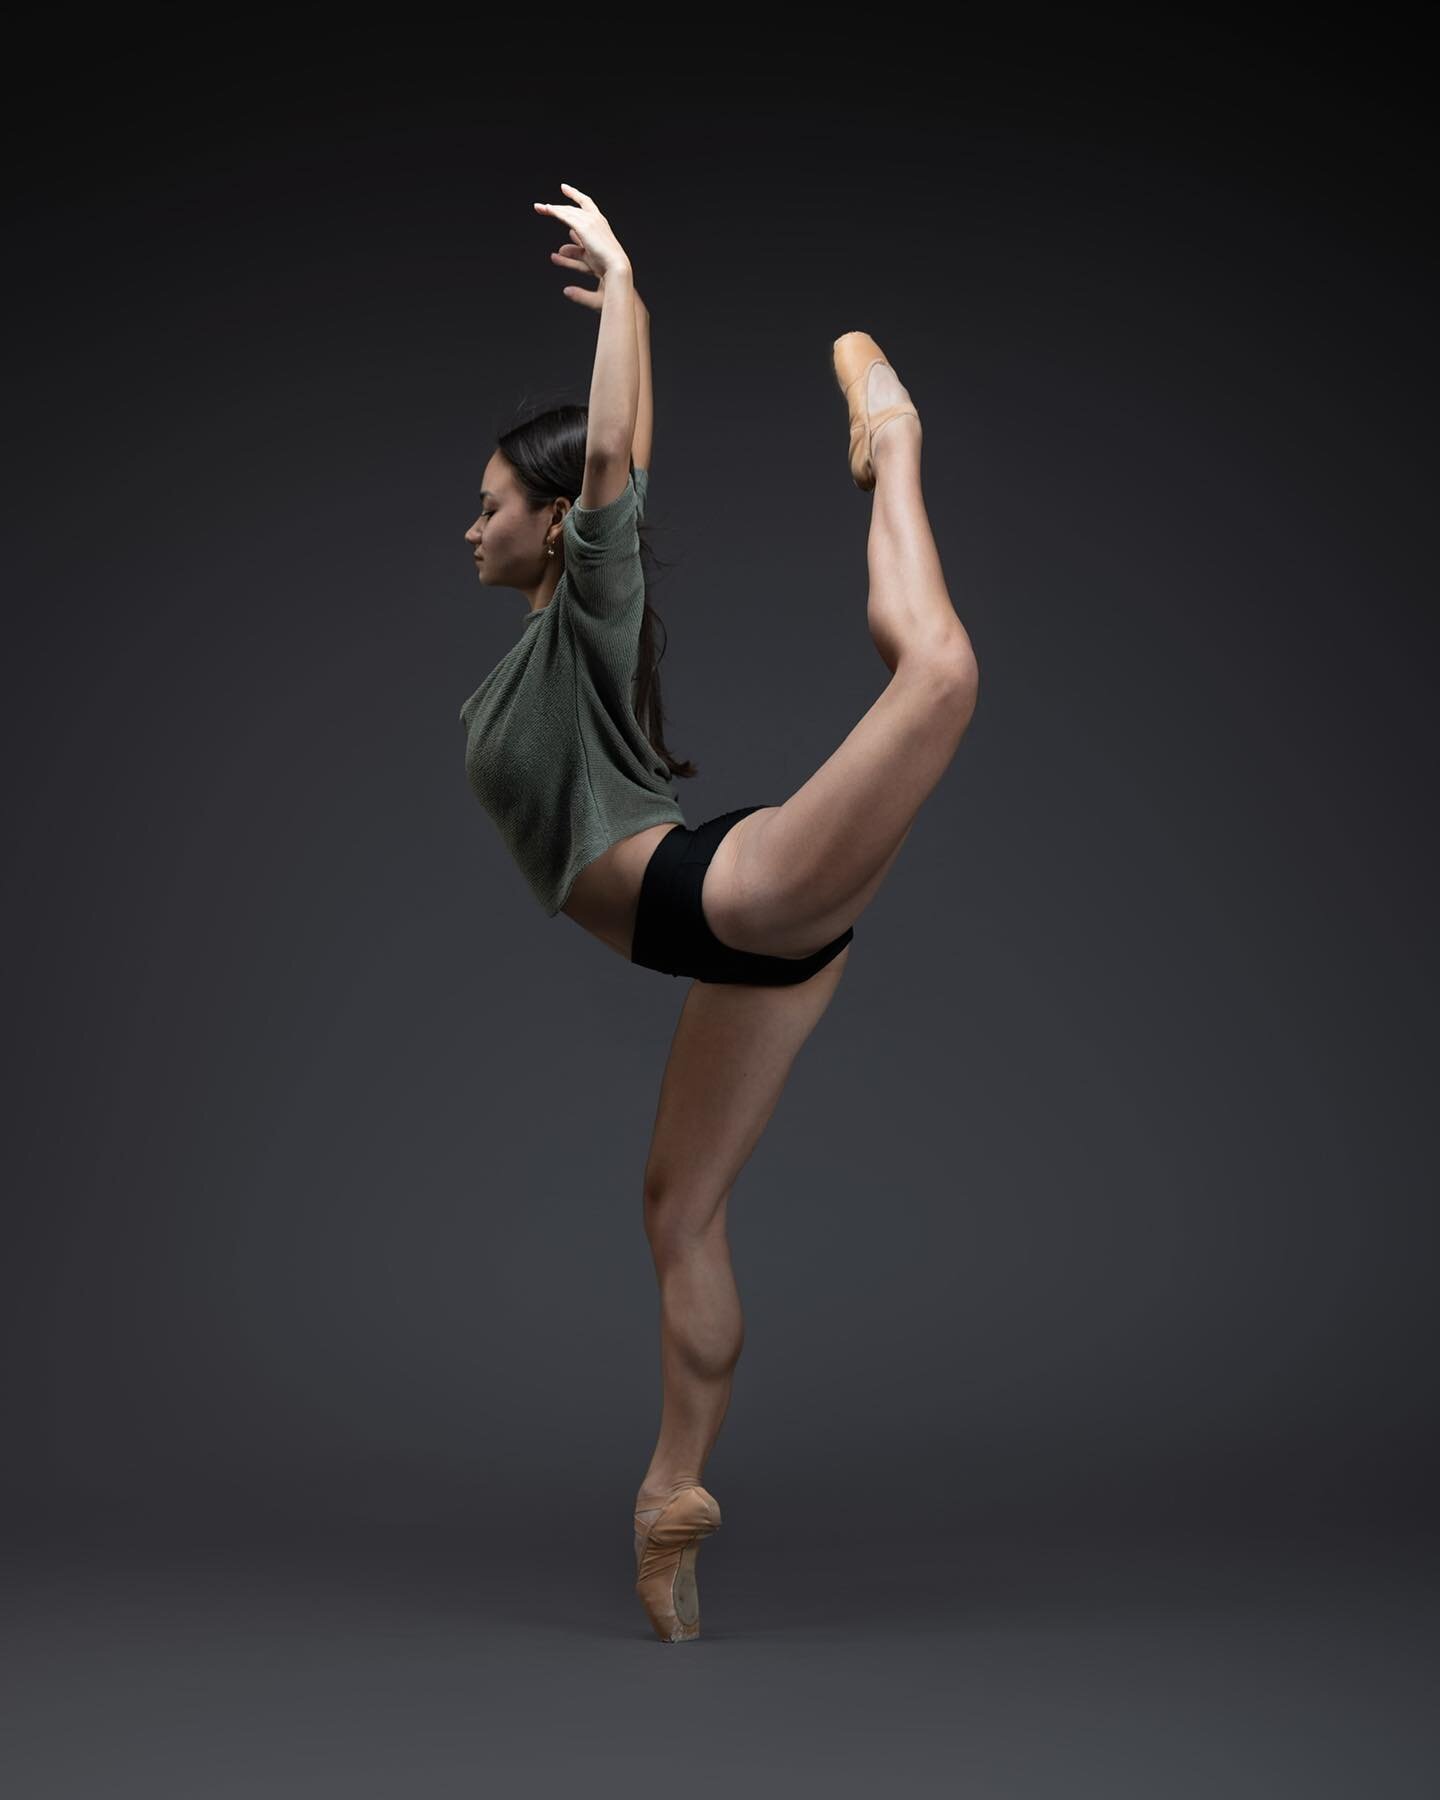 Happy Monday! Hope everyone had a wonderful weekend! 💐 // @gabi.lukasik 😍 // 2020 
_________________________________________
#candidlycreated #franciscoestevezphotography #photoshoot #balletdancer #photography #balletpost #artist #ballerina #ballet